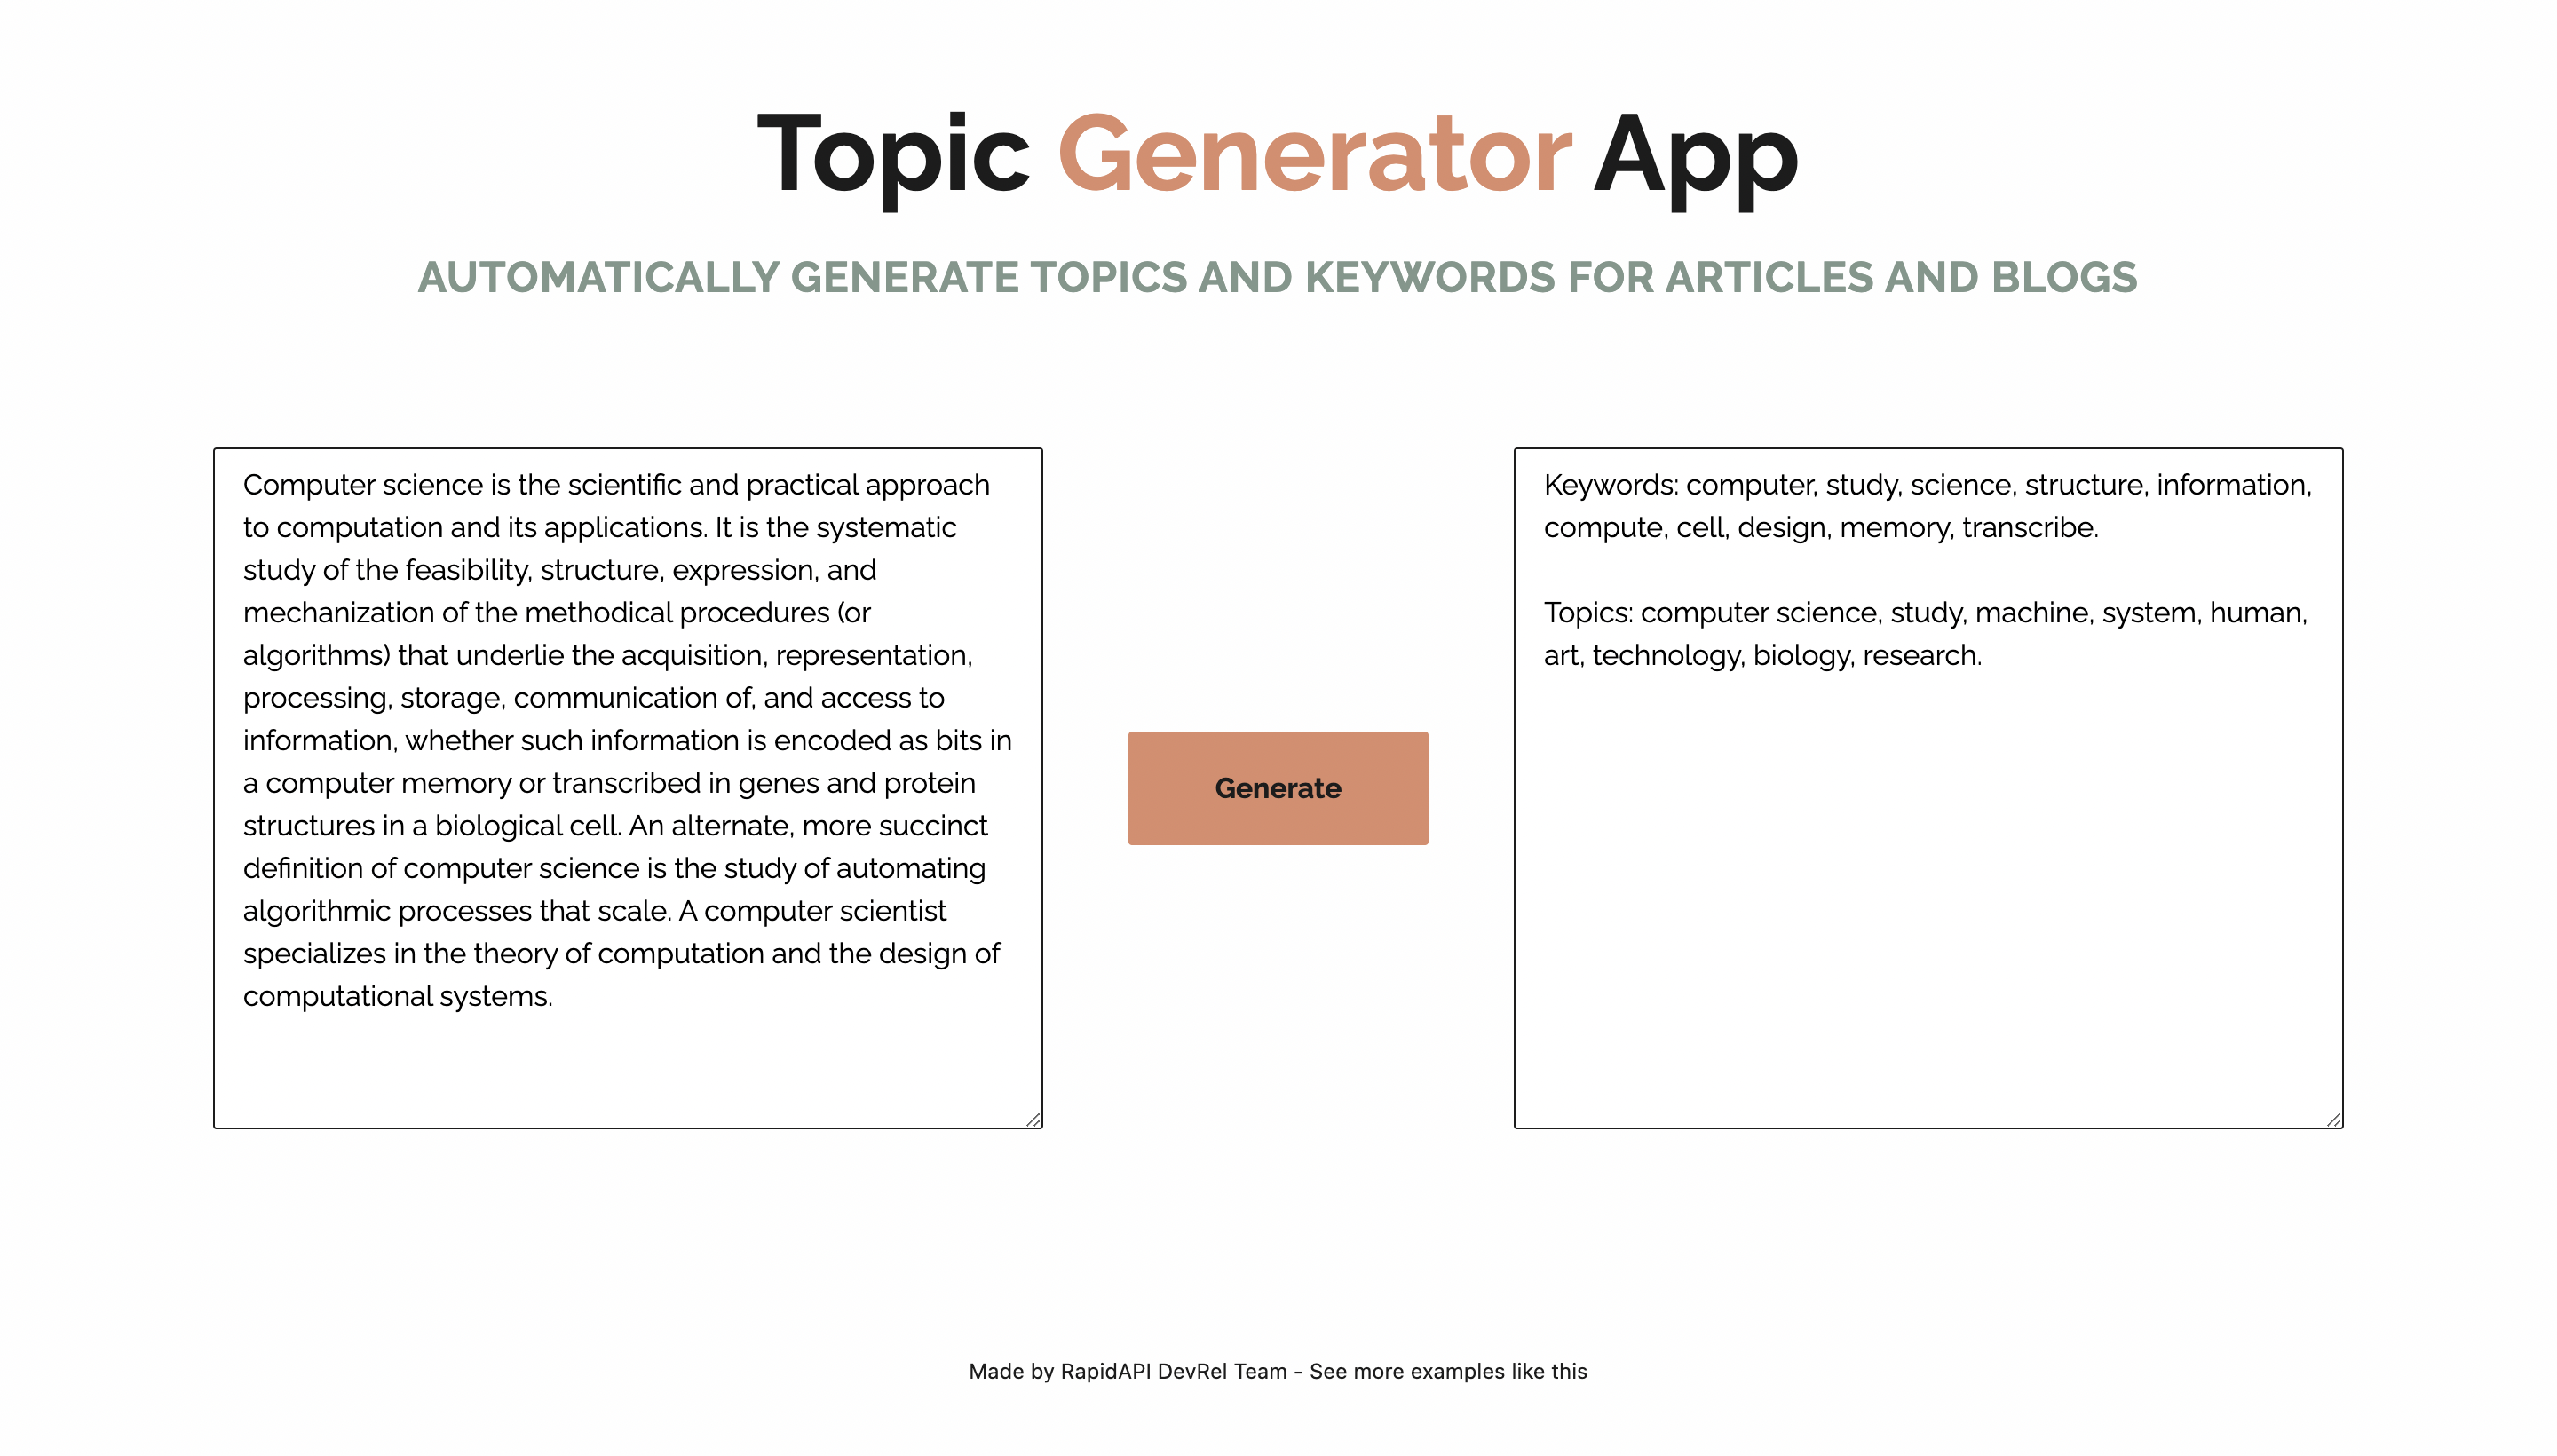 Topic generator app